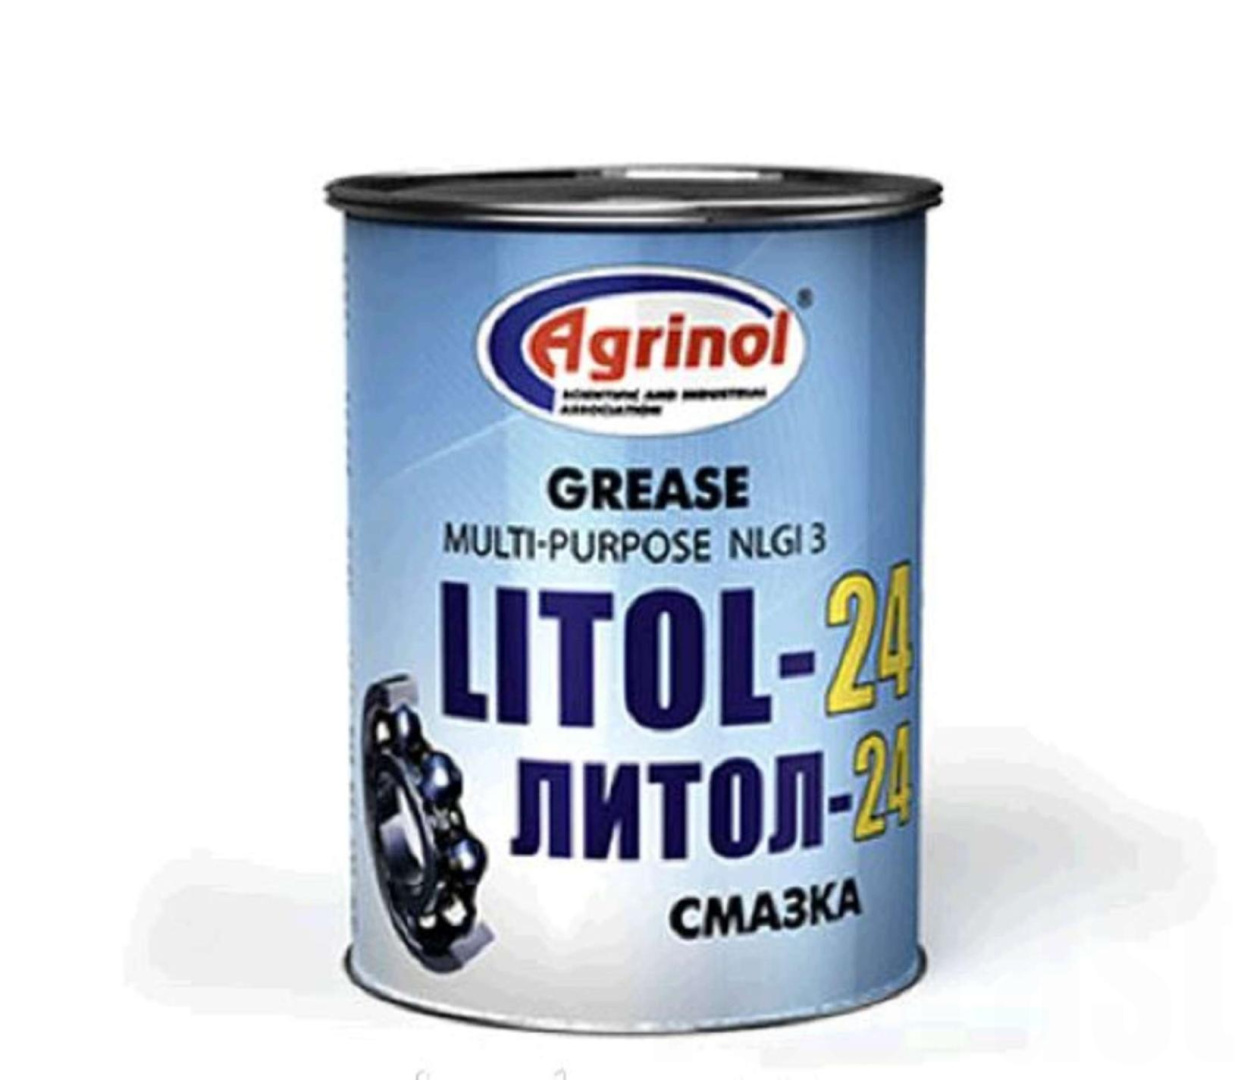 Смазка литиевая густая 800мл   ж/б   (Литол-24)   АГРИНОЛ   (#GPL)